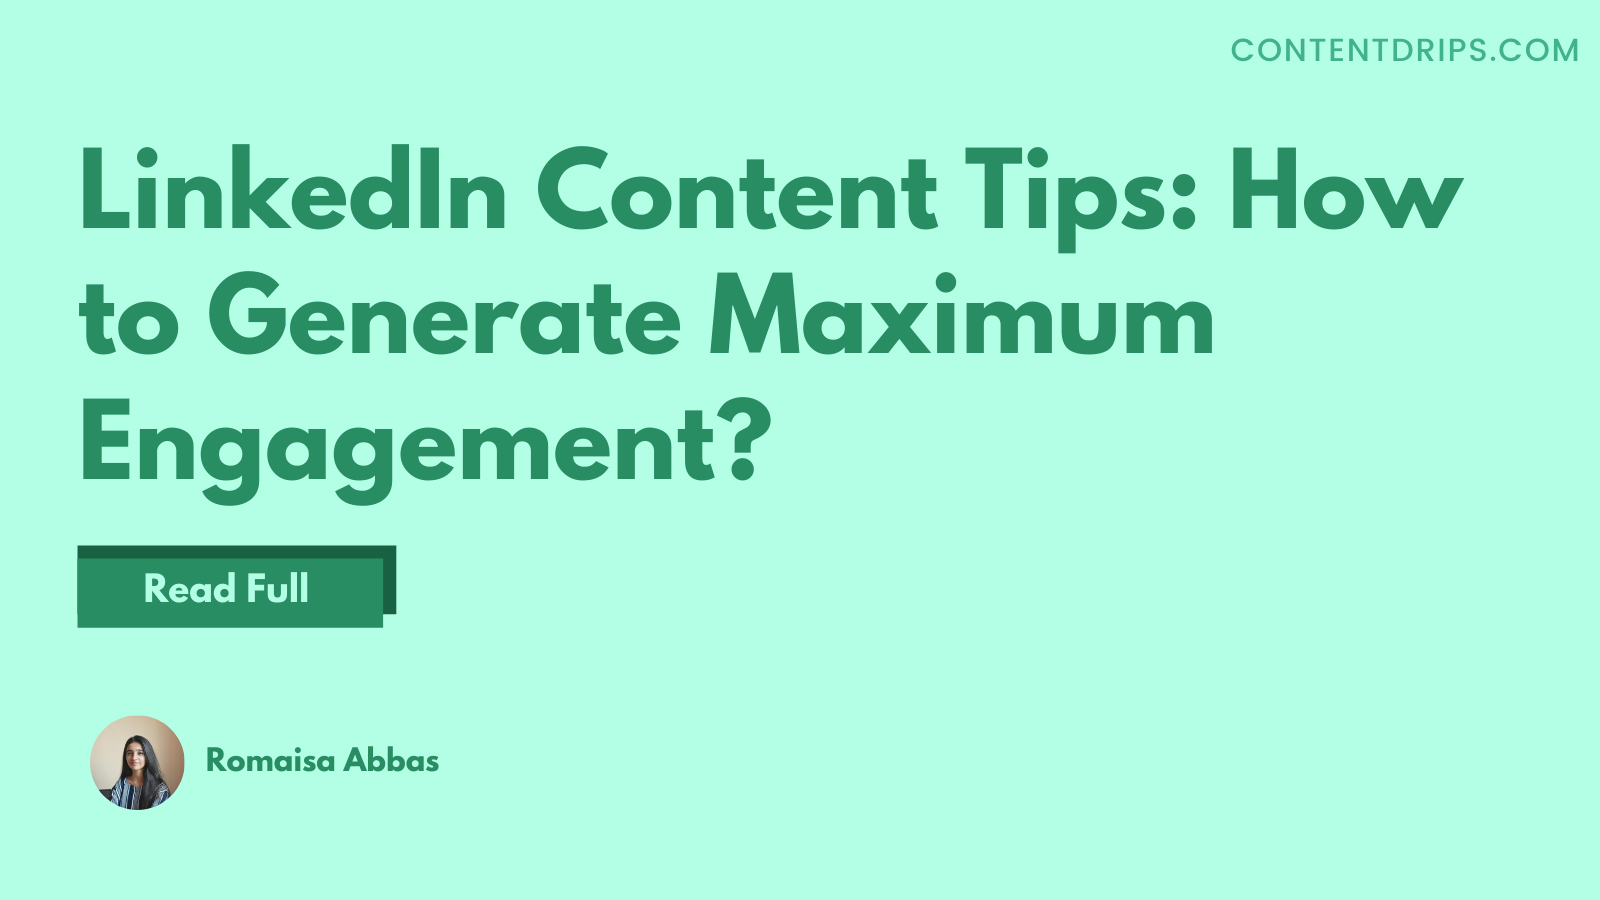 LinkedIn Content Tips